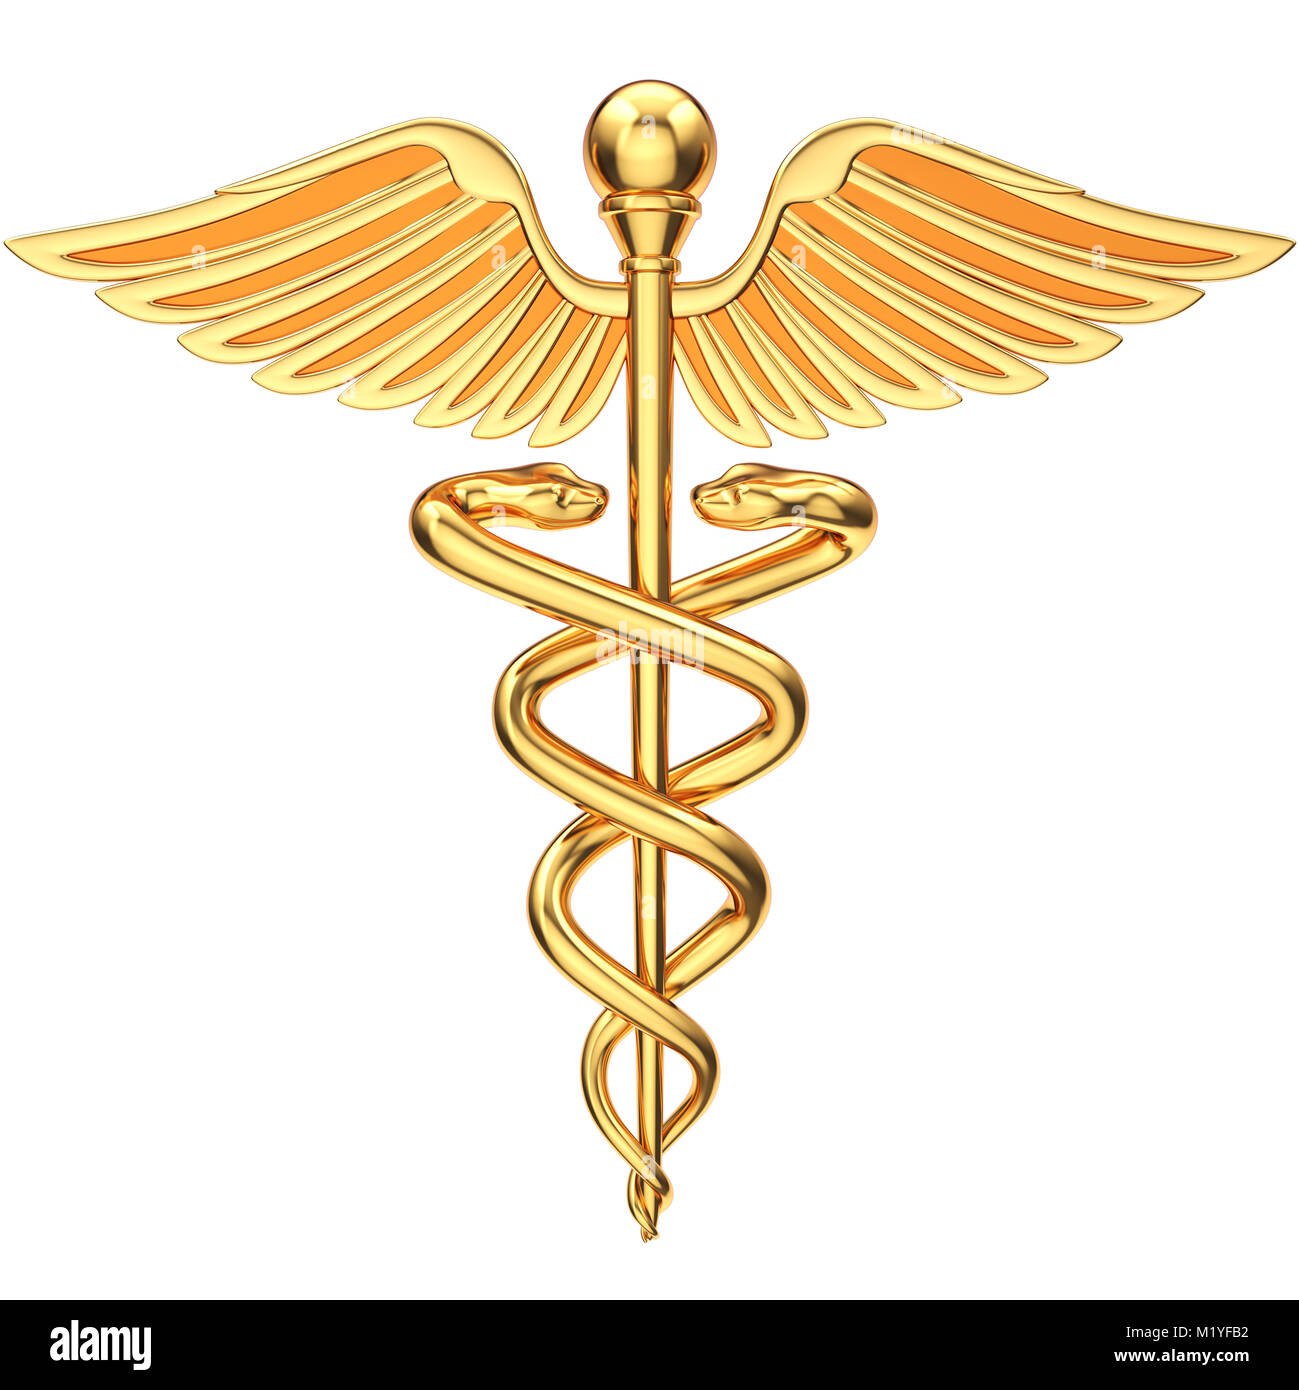 https://c8.alamy.com/comp/M1YFB2/golden-caduceus-medical-symbol-3d-illustration-M1YFB2.jpg